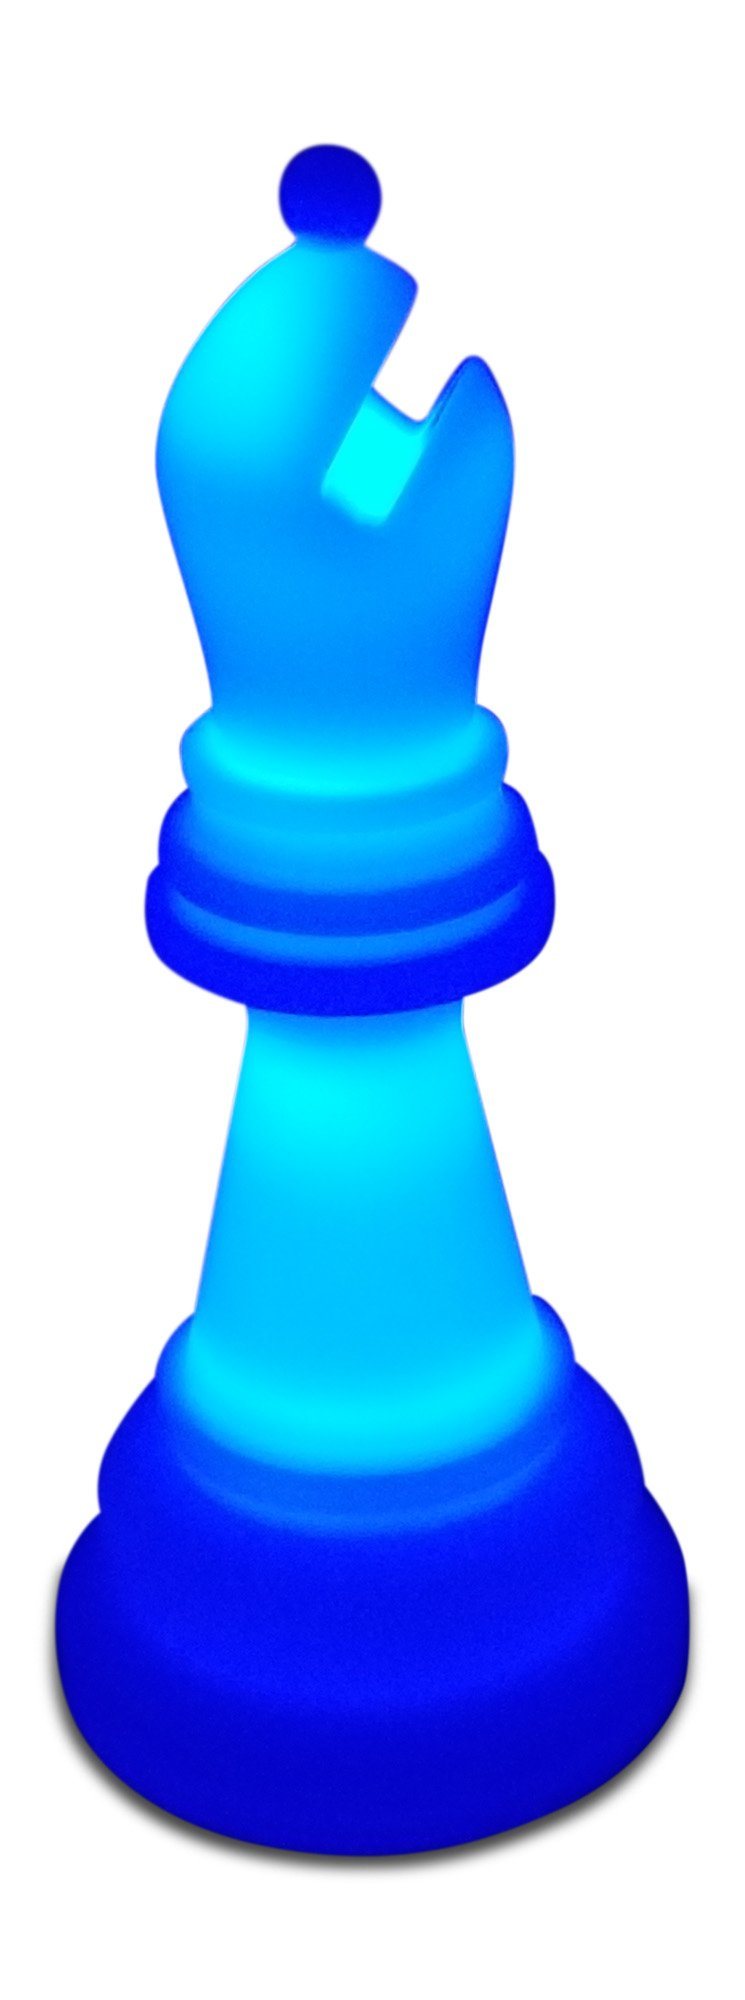 MegaChess 28 Inch Premium Plastic Bishop Light-Up Giant Chess Piece - Blue | Default Title | GiantChessUSA